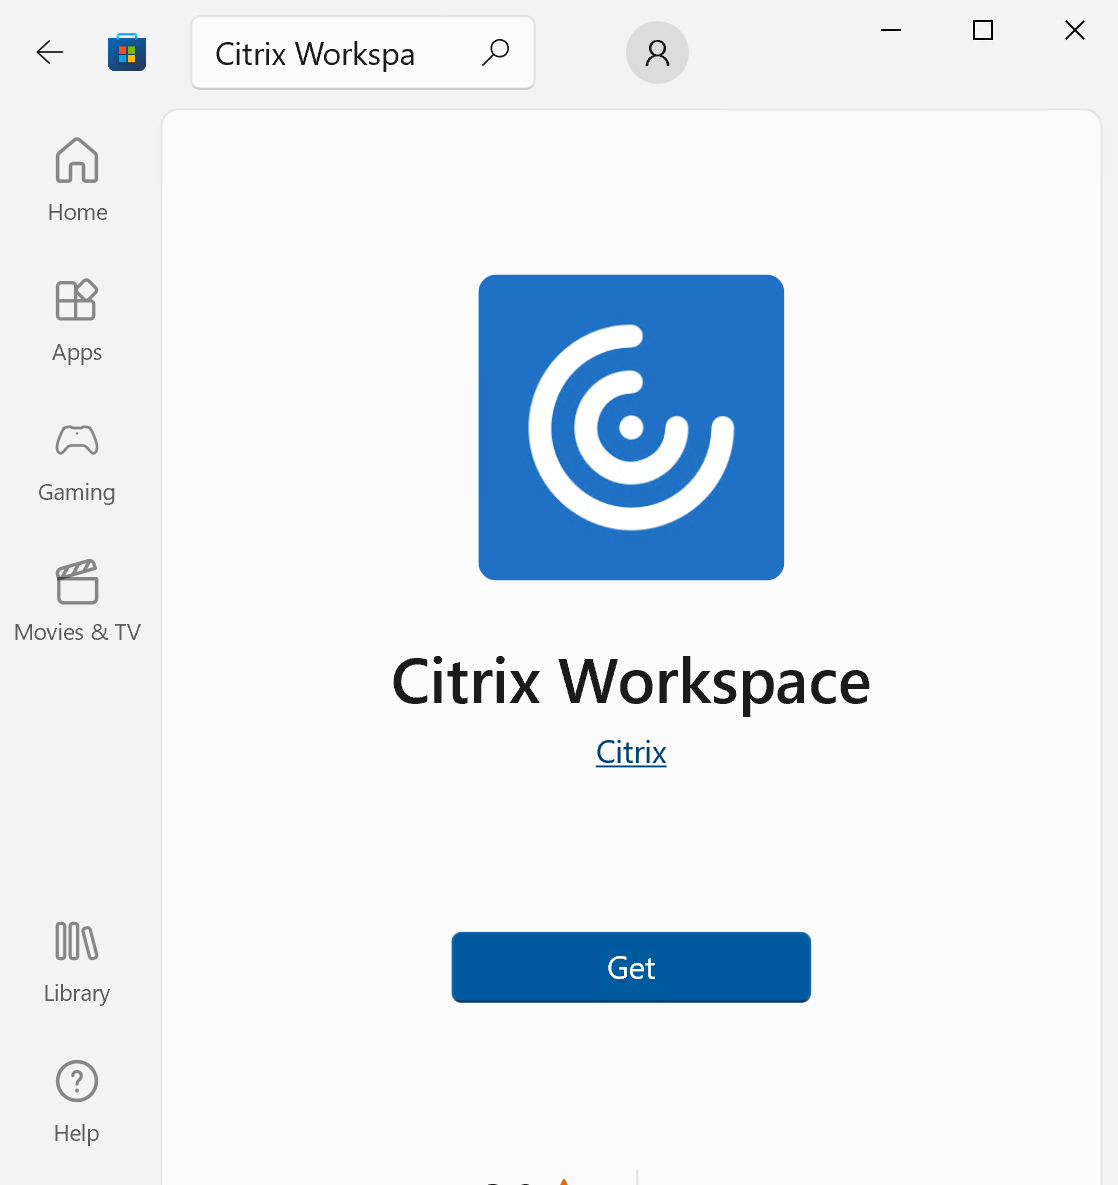 citrix workspace 2202 download for windows